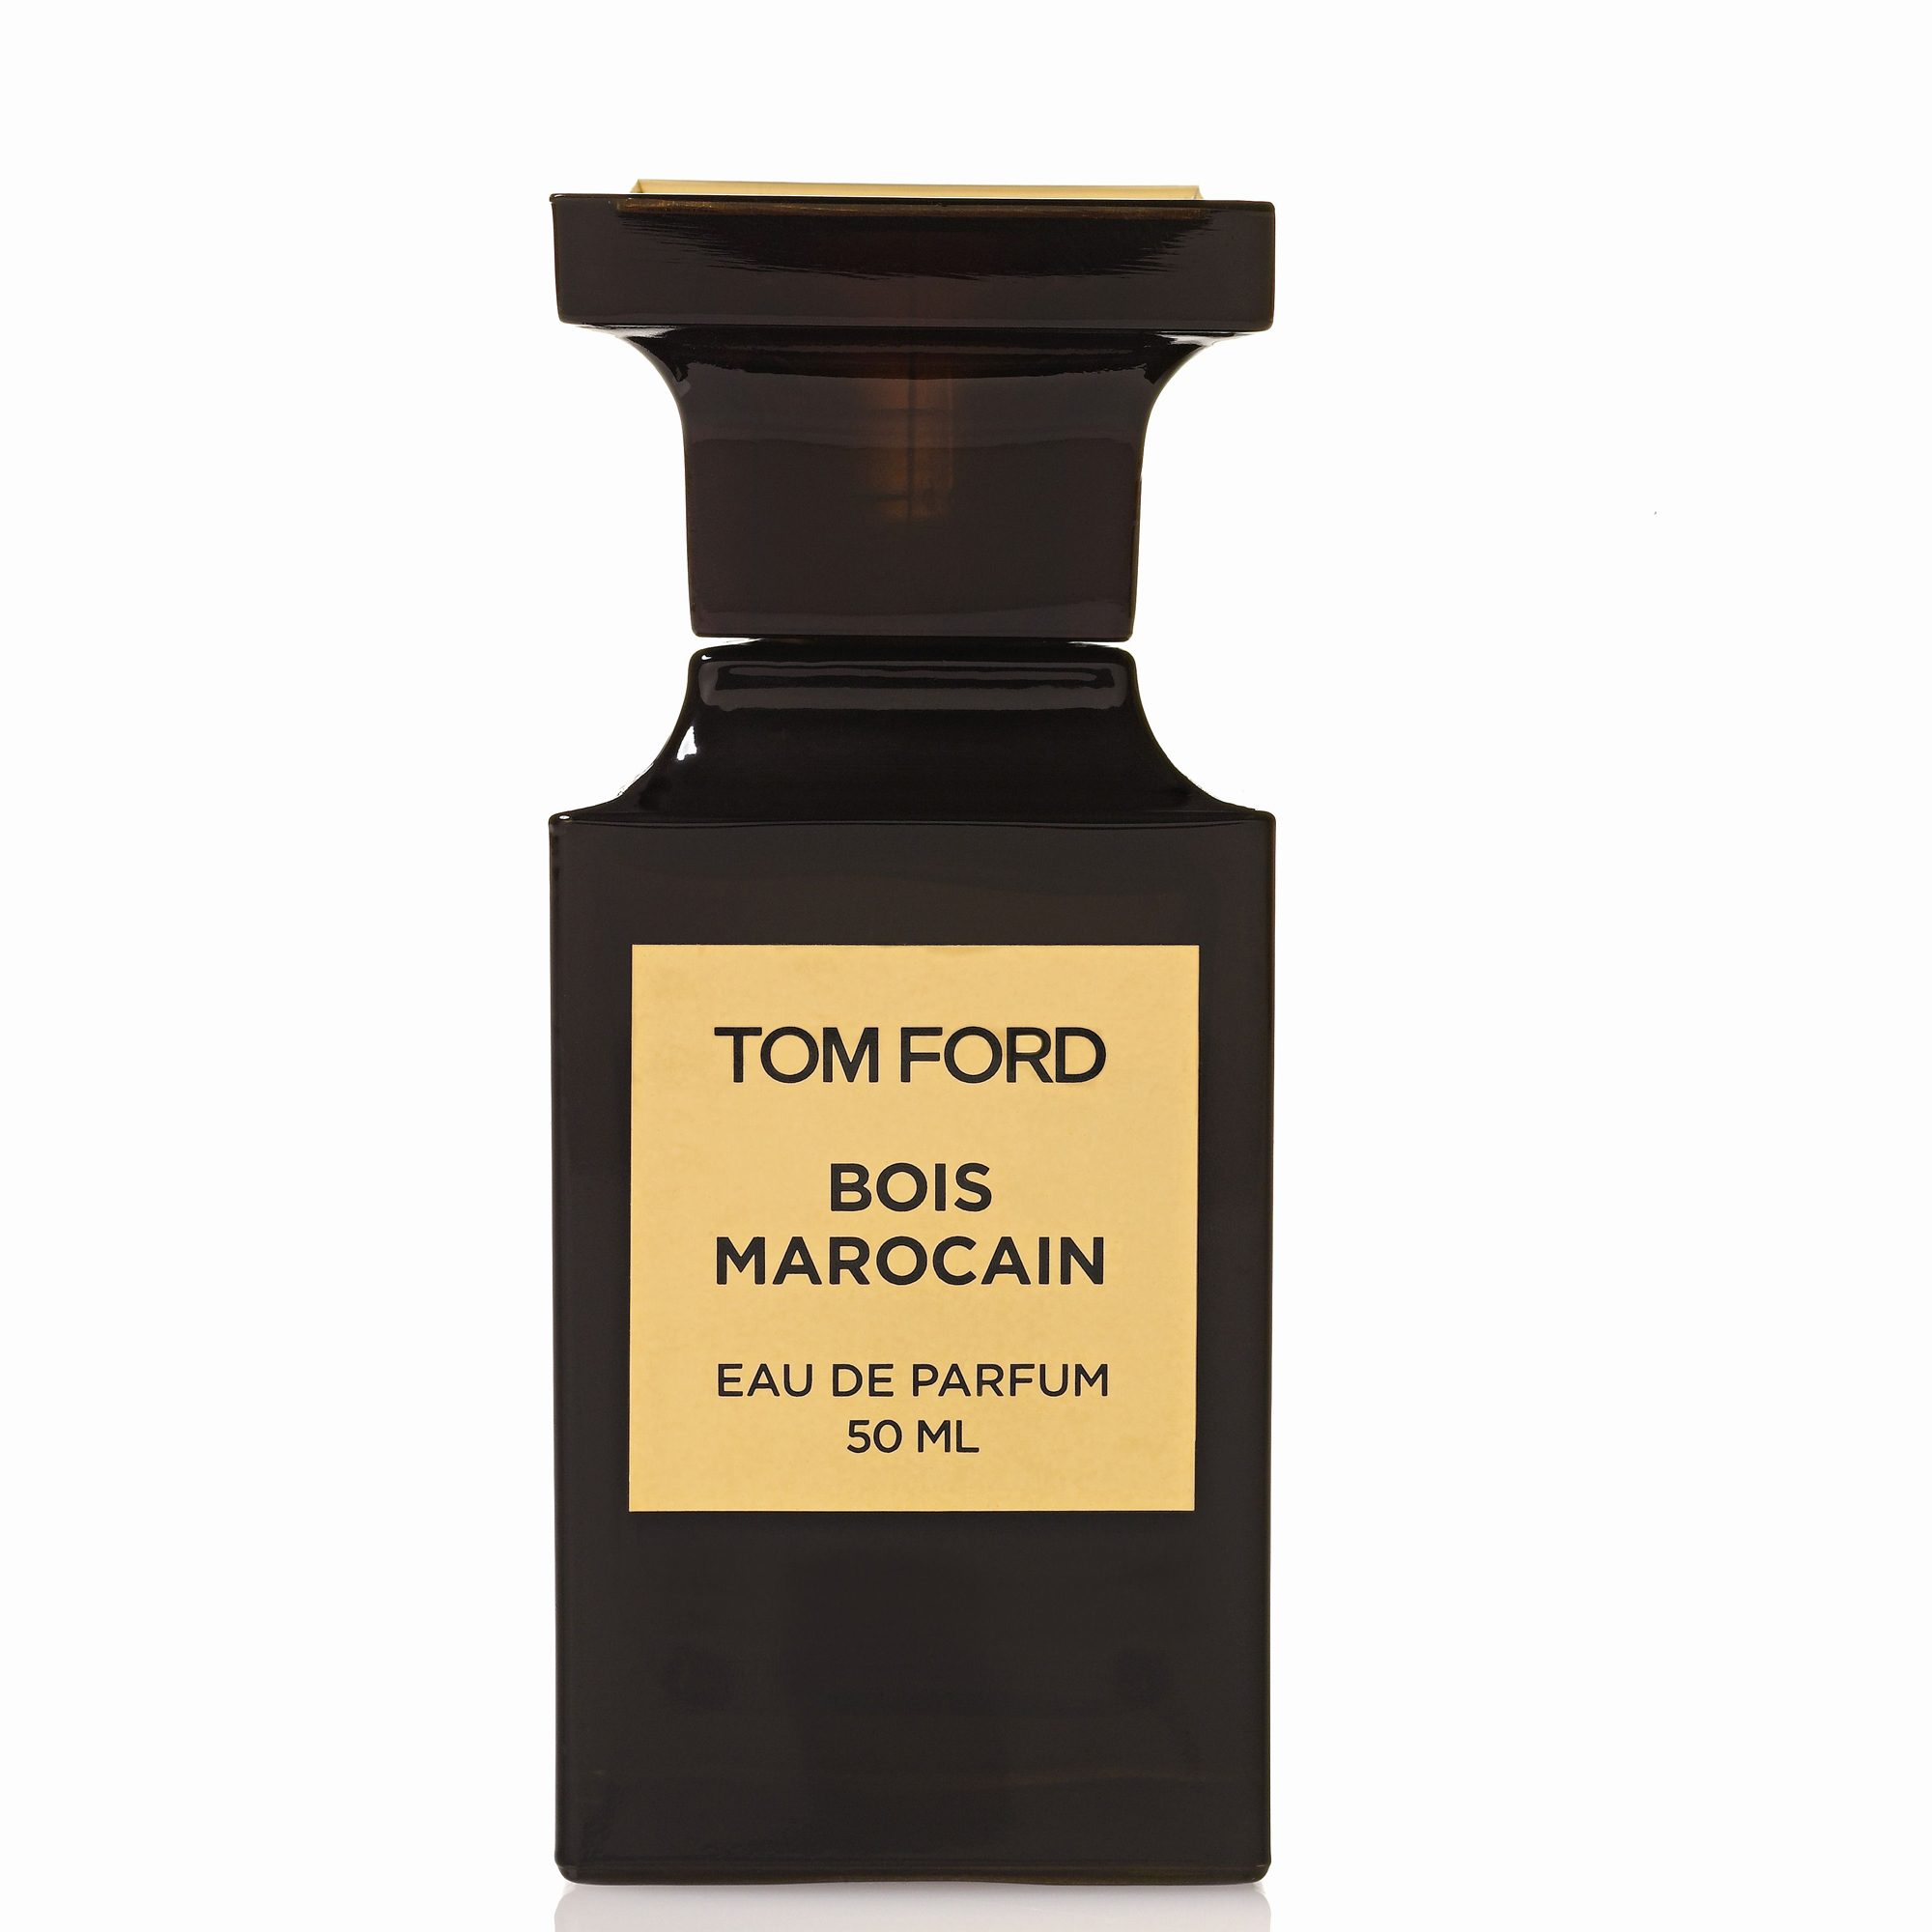 Tom ford bois marocain parfum #10